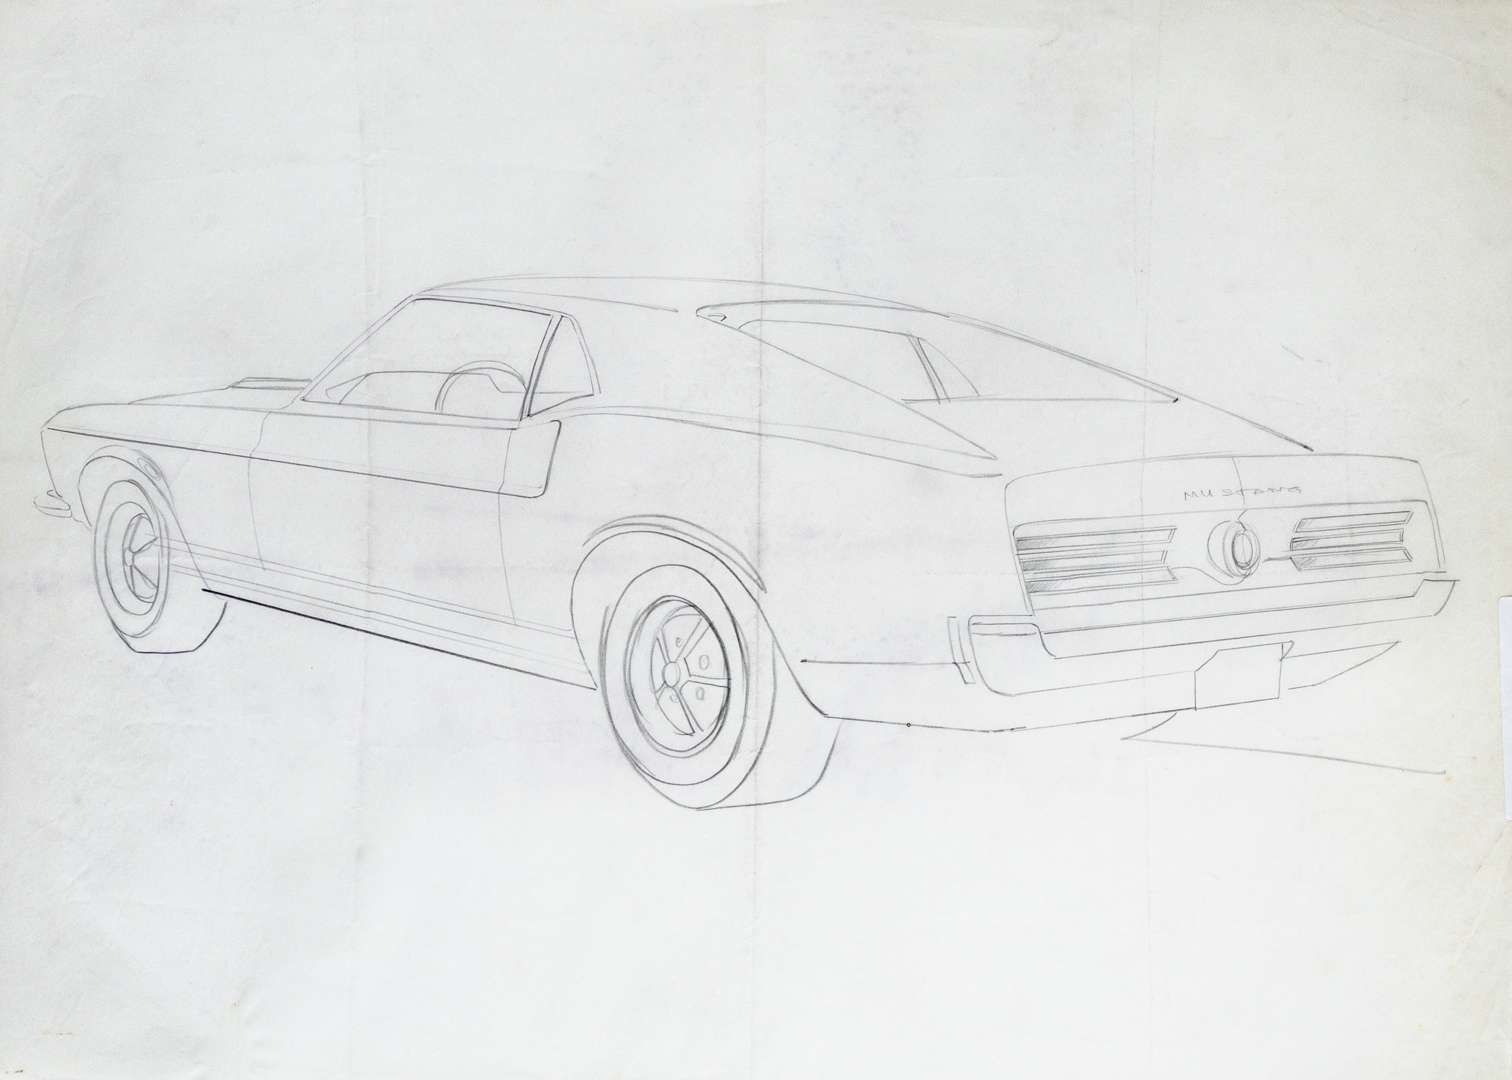 <p>1969 Mustang Rear End Proposal</p>